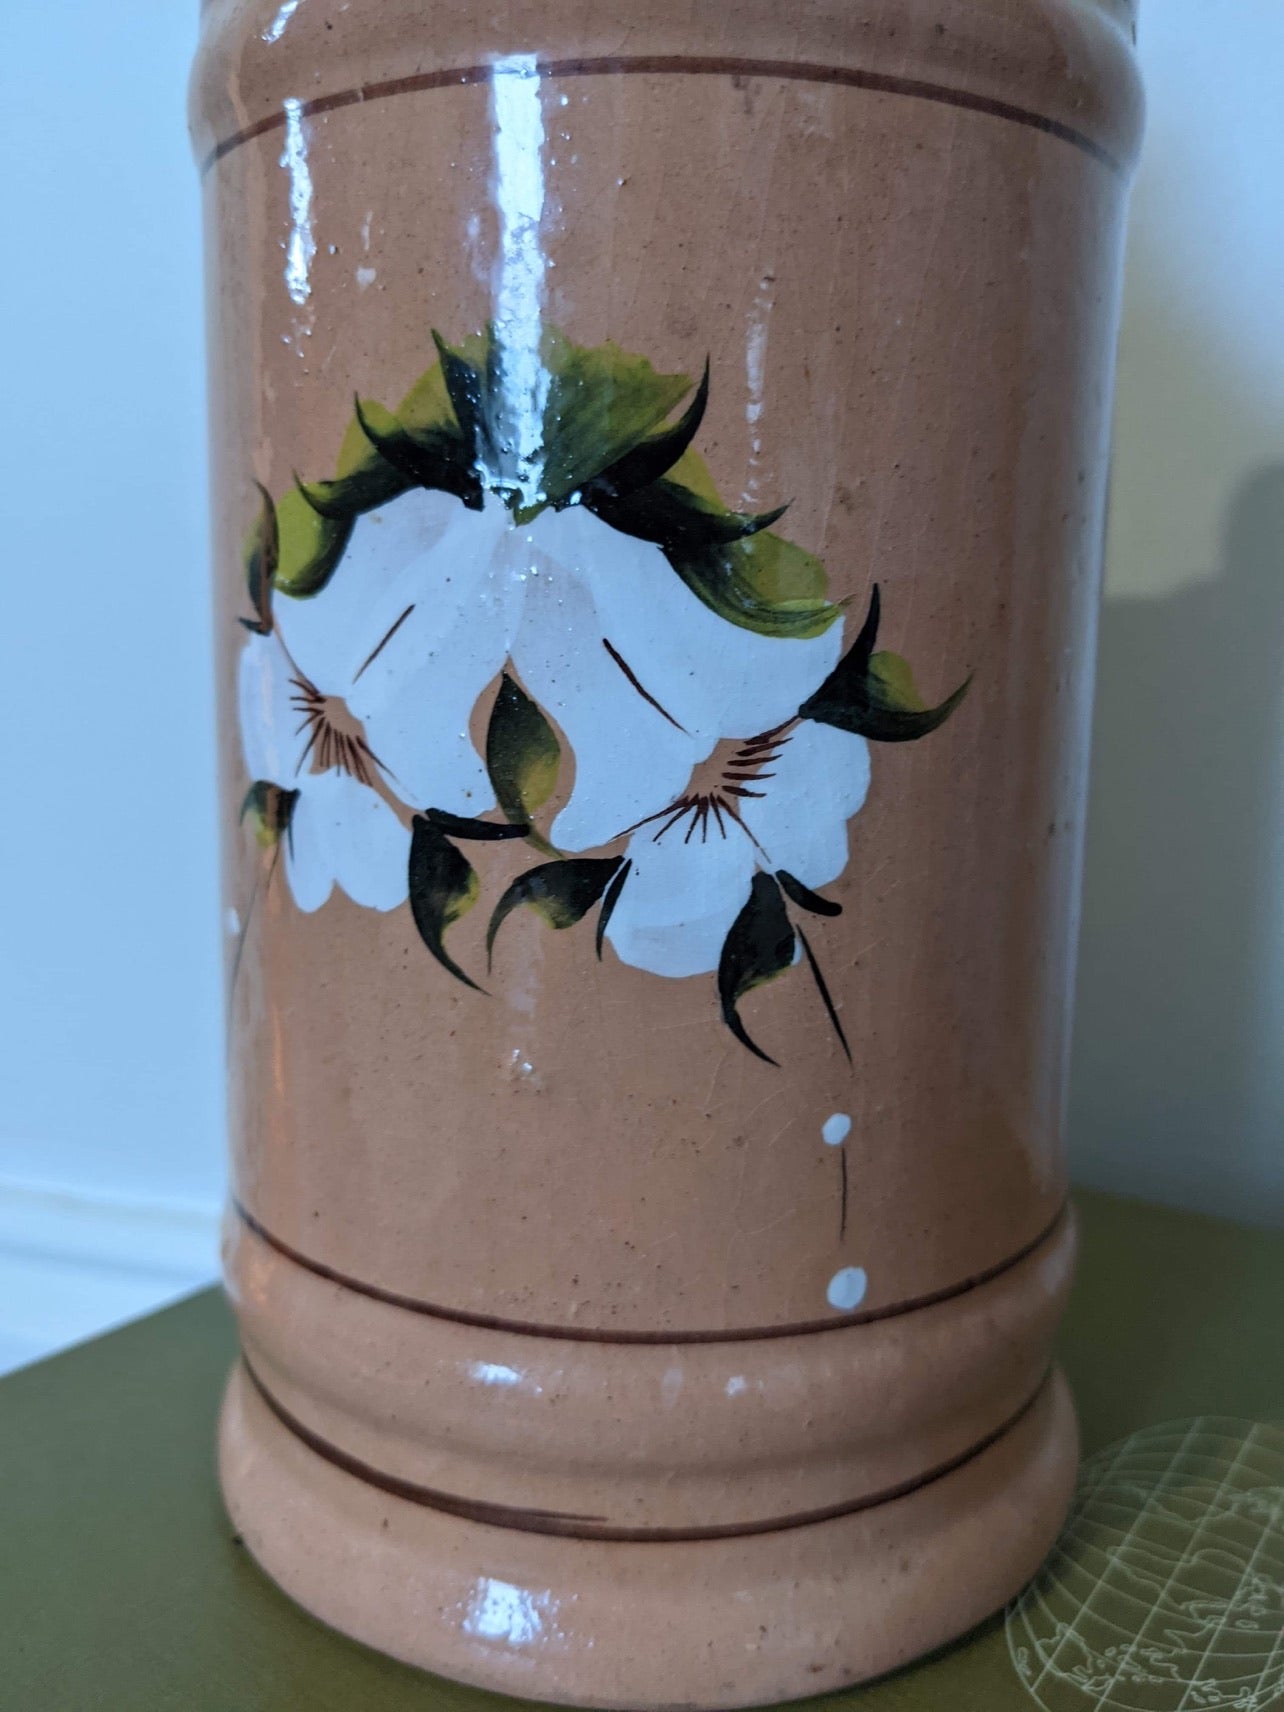 The White Flower Jar